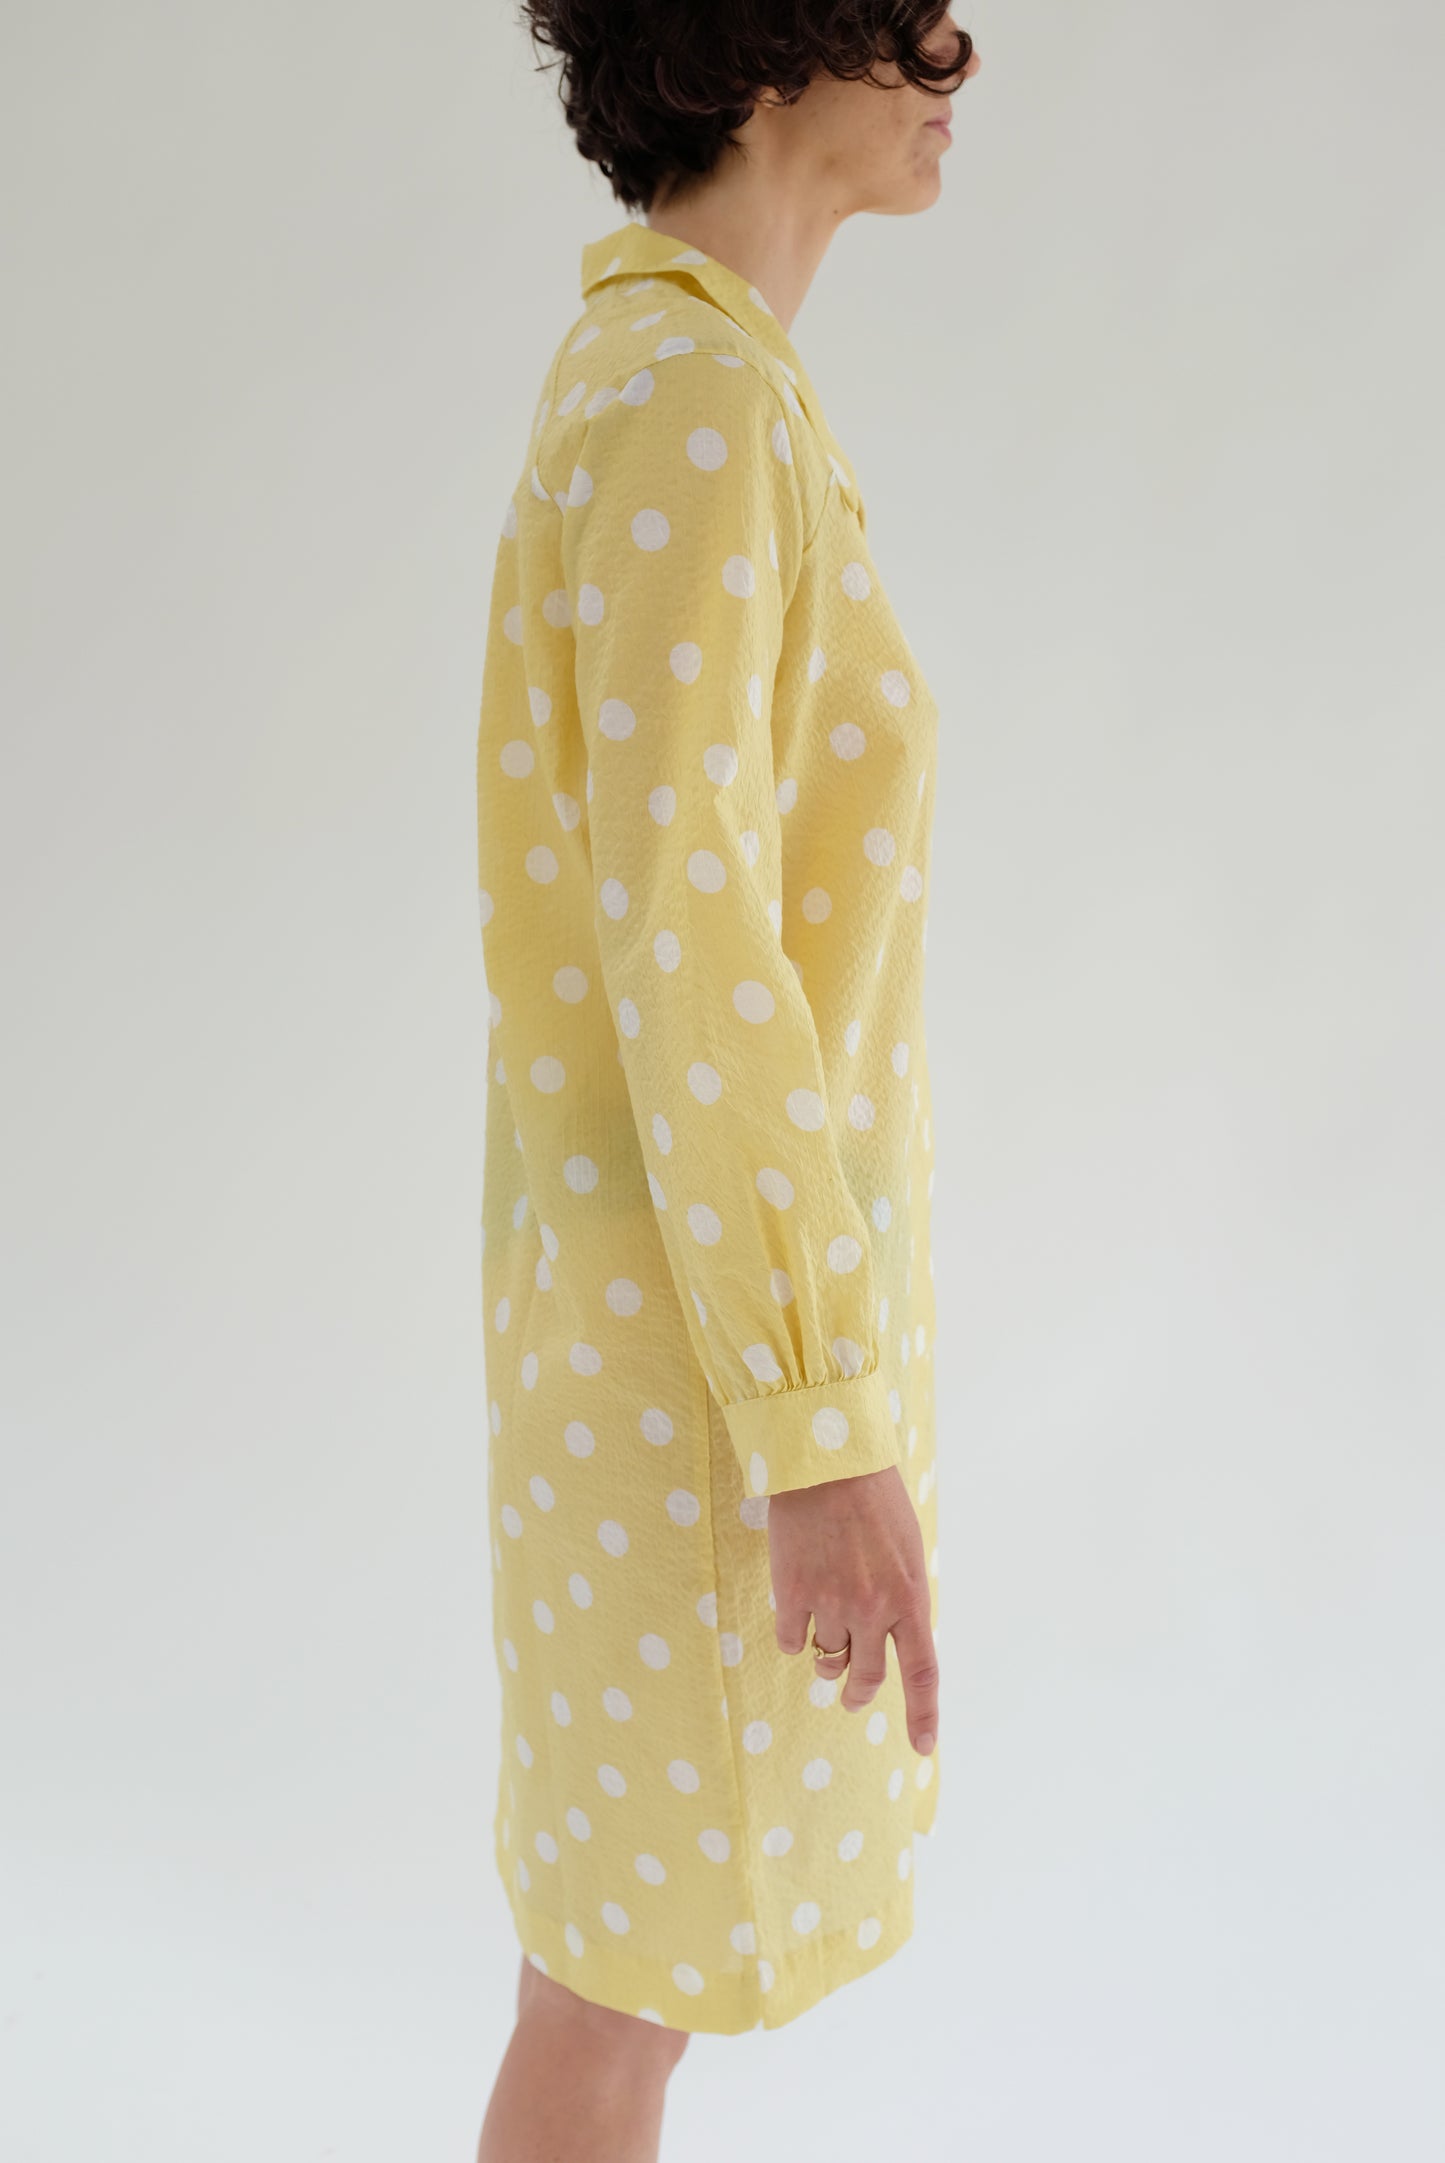 Beklina Deco Dress Yellow Polka Dot